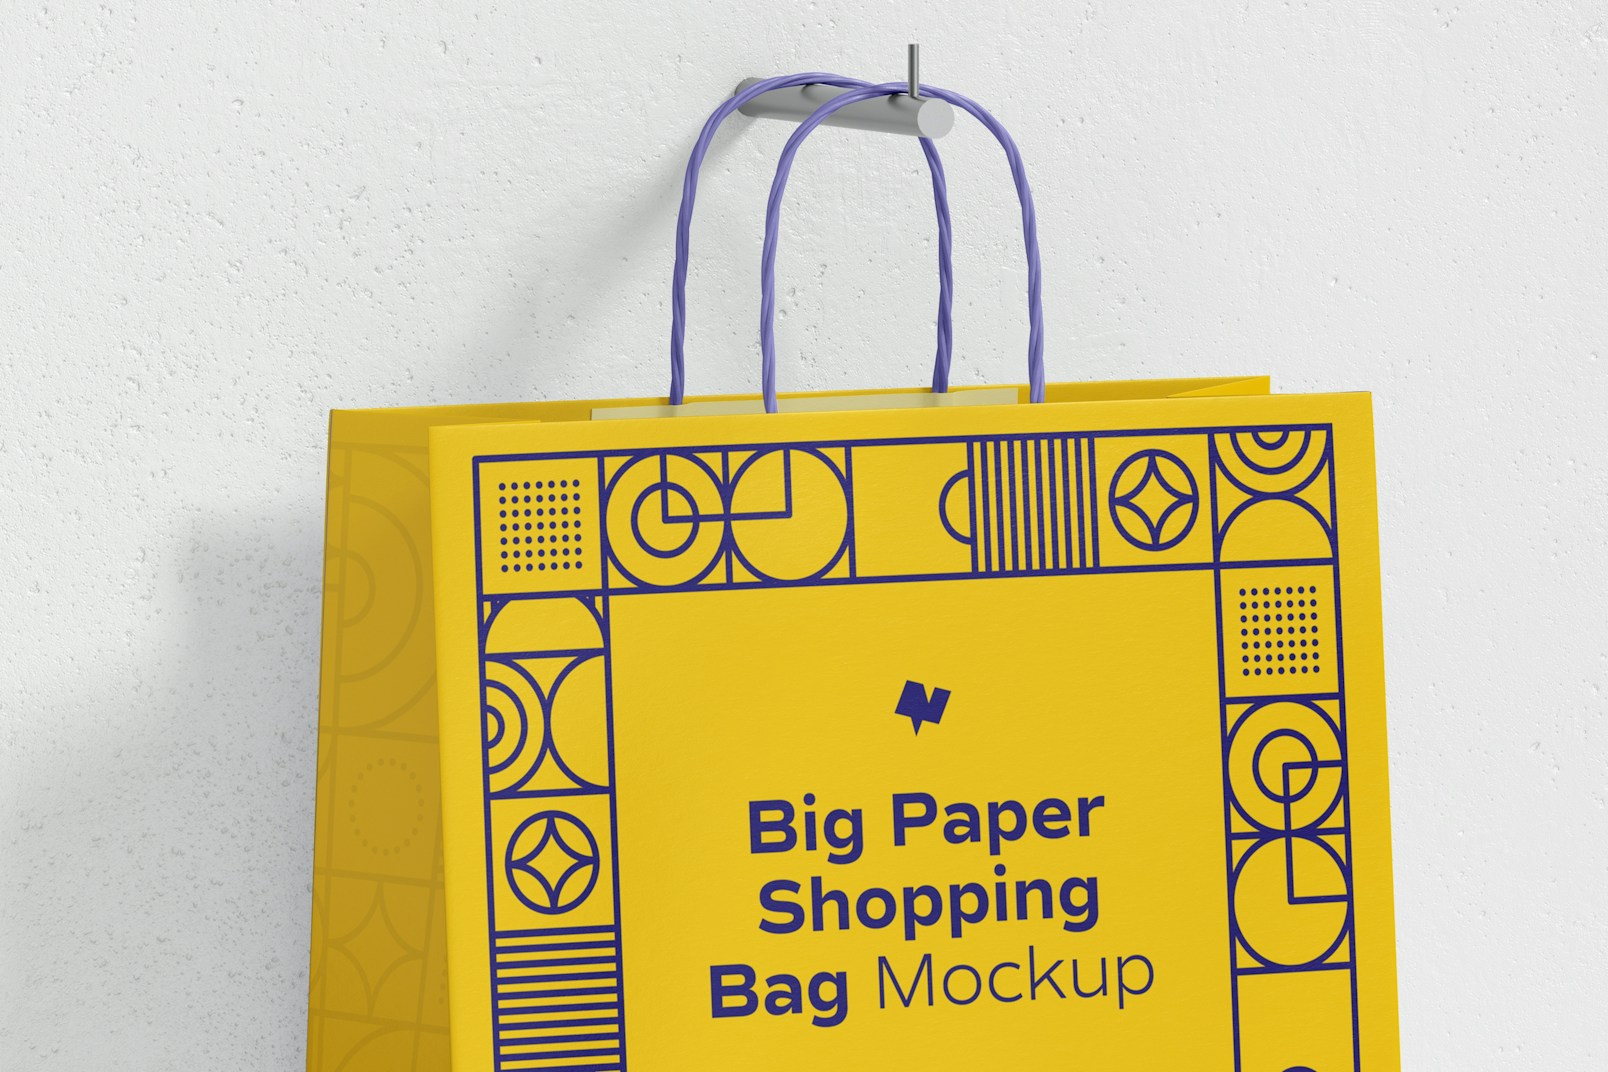 Big Paper Shopping Bag Mockup, Hanging